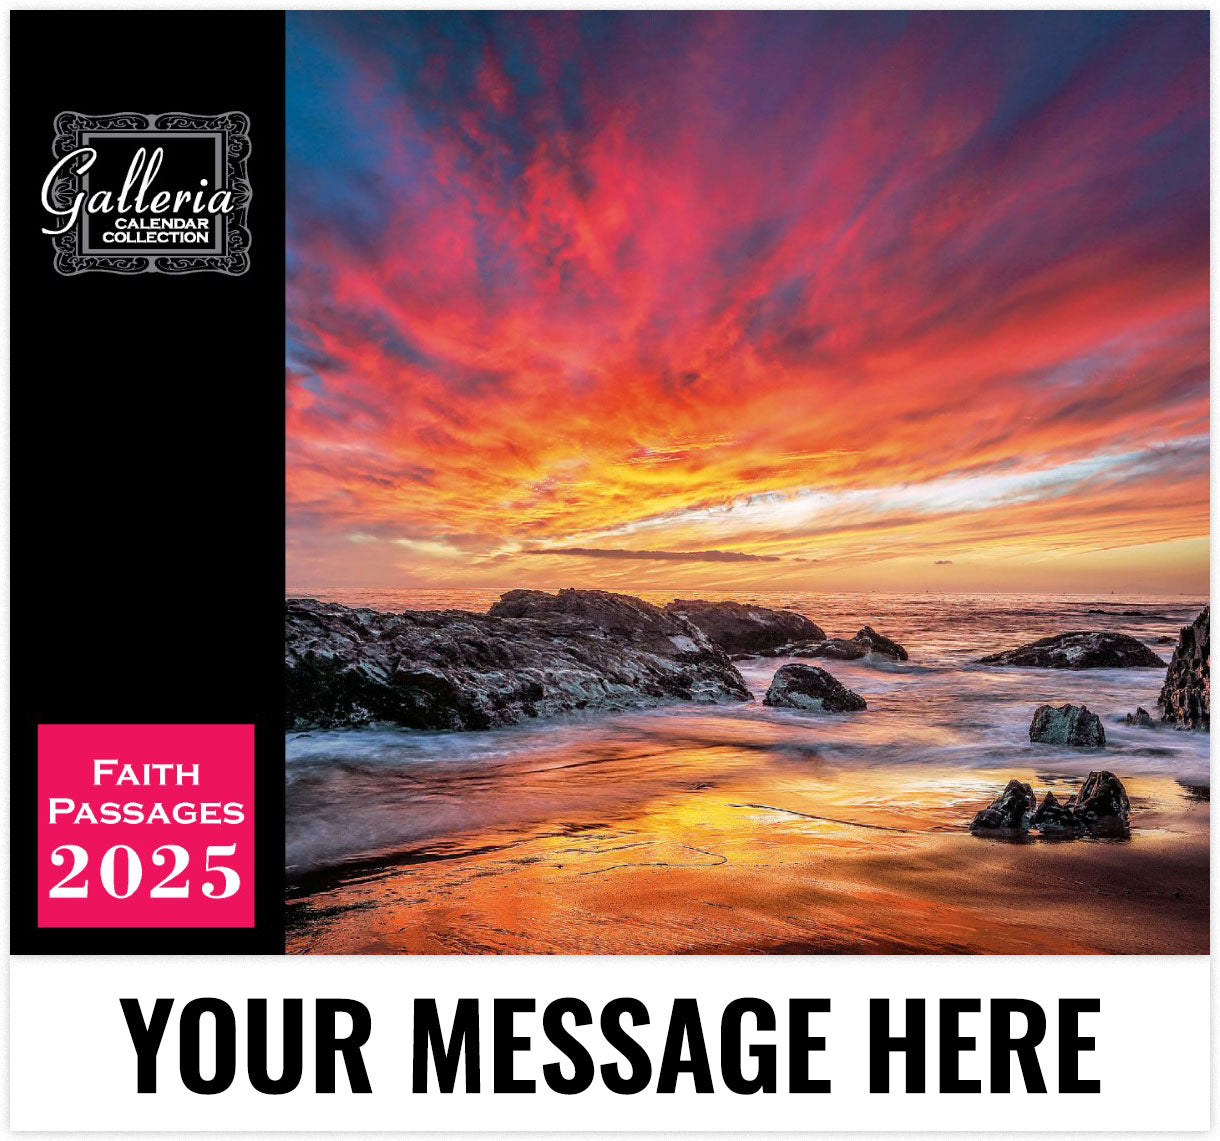 Galleria Faith Passages - 2025 Promotional Calendar